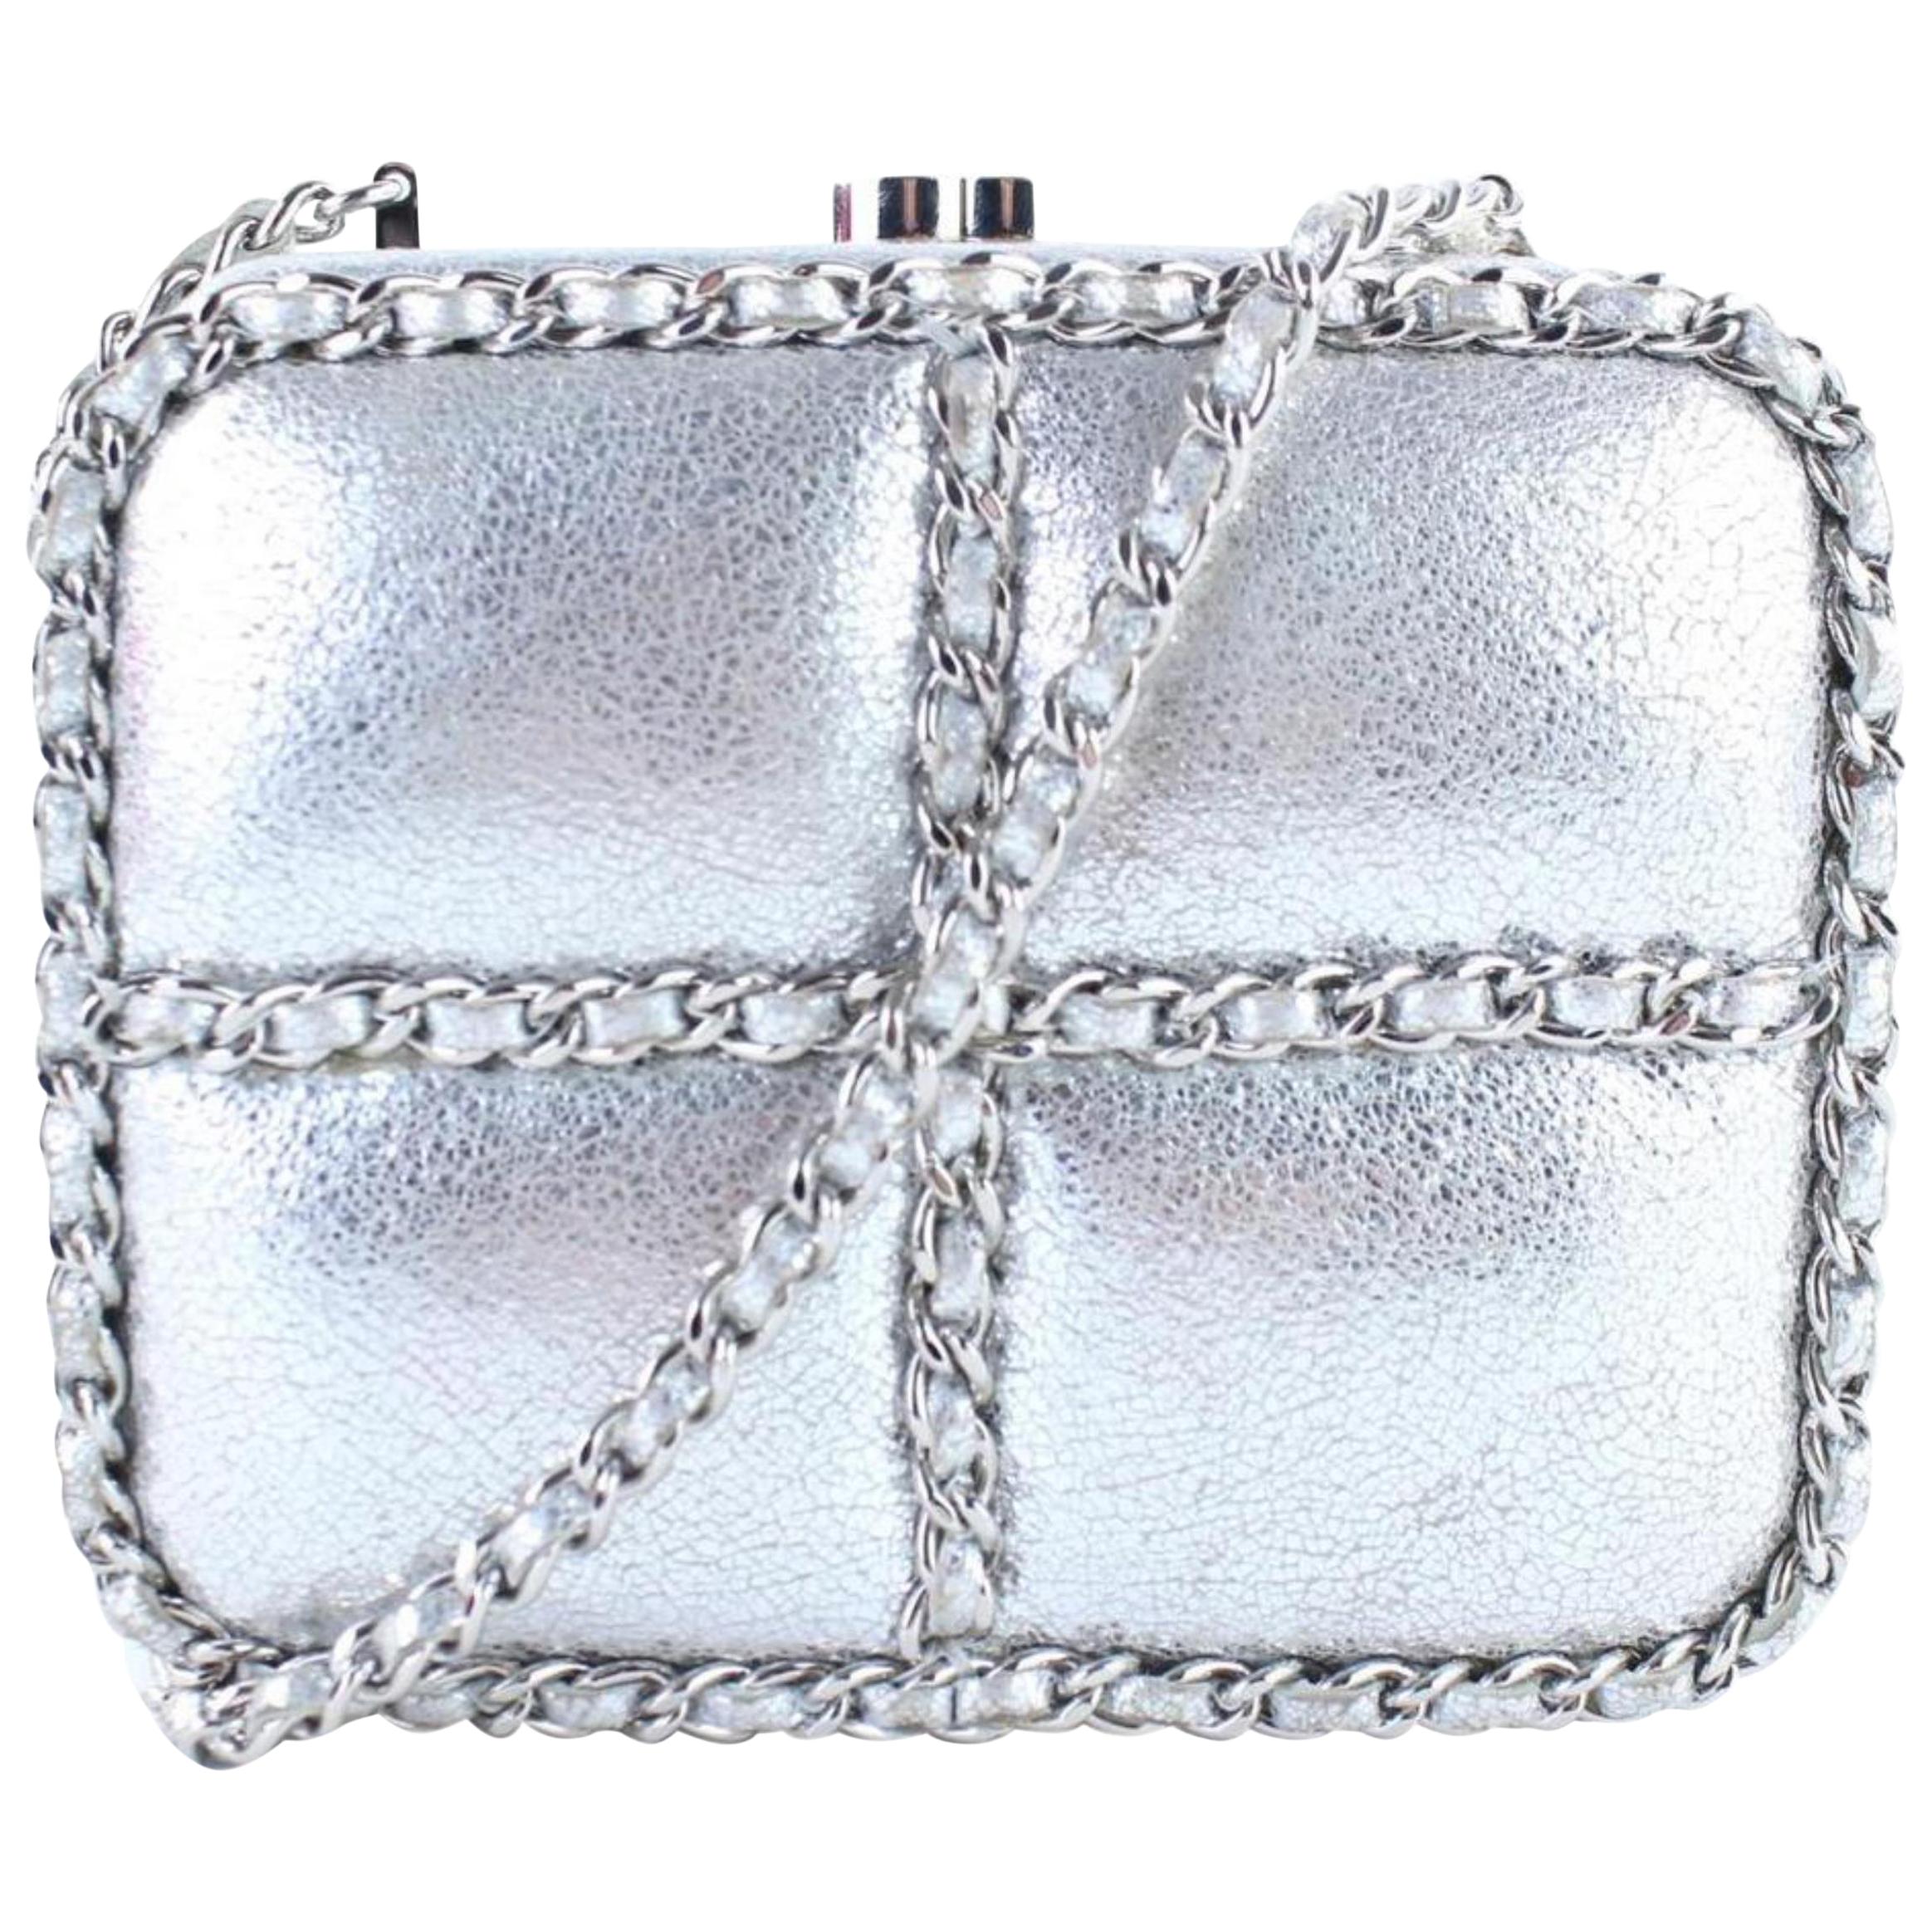 Chanel Minaudière Metallic 1cr0115 Silver Leather Cross Body Bag For Sale